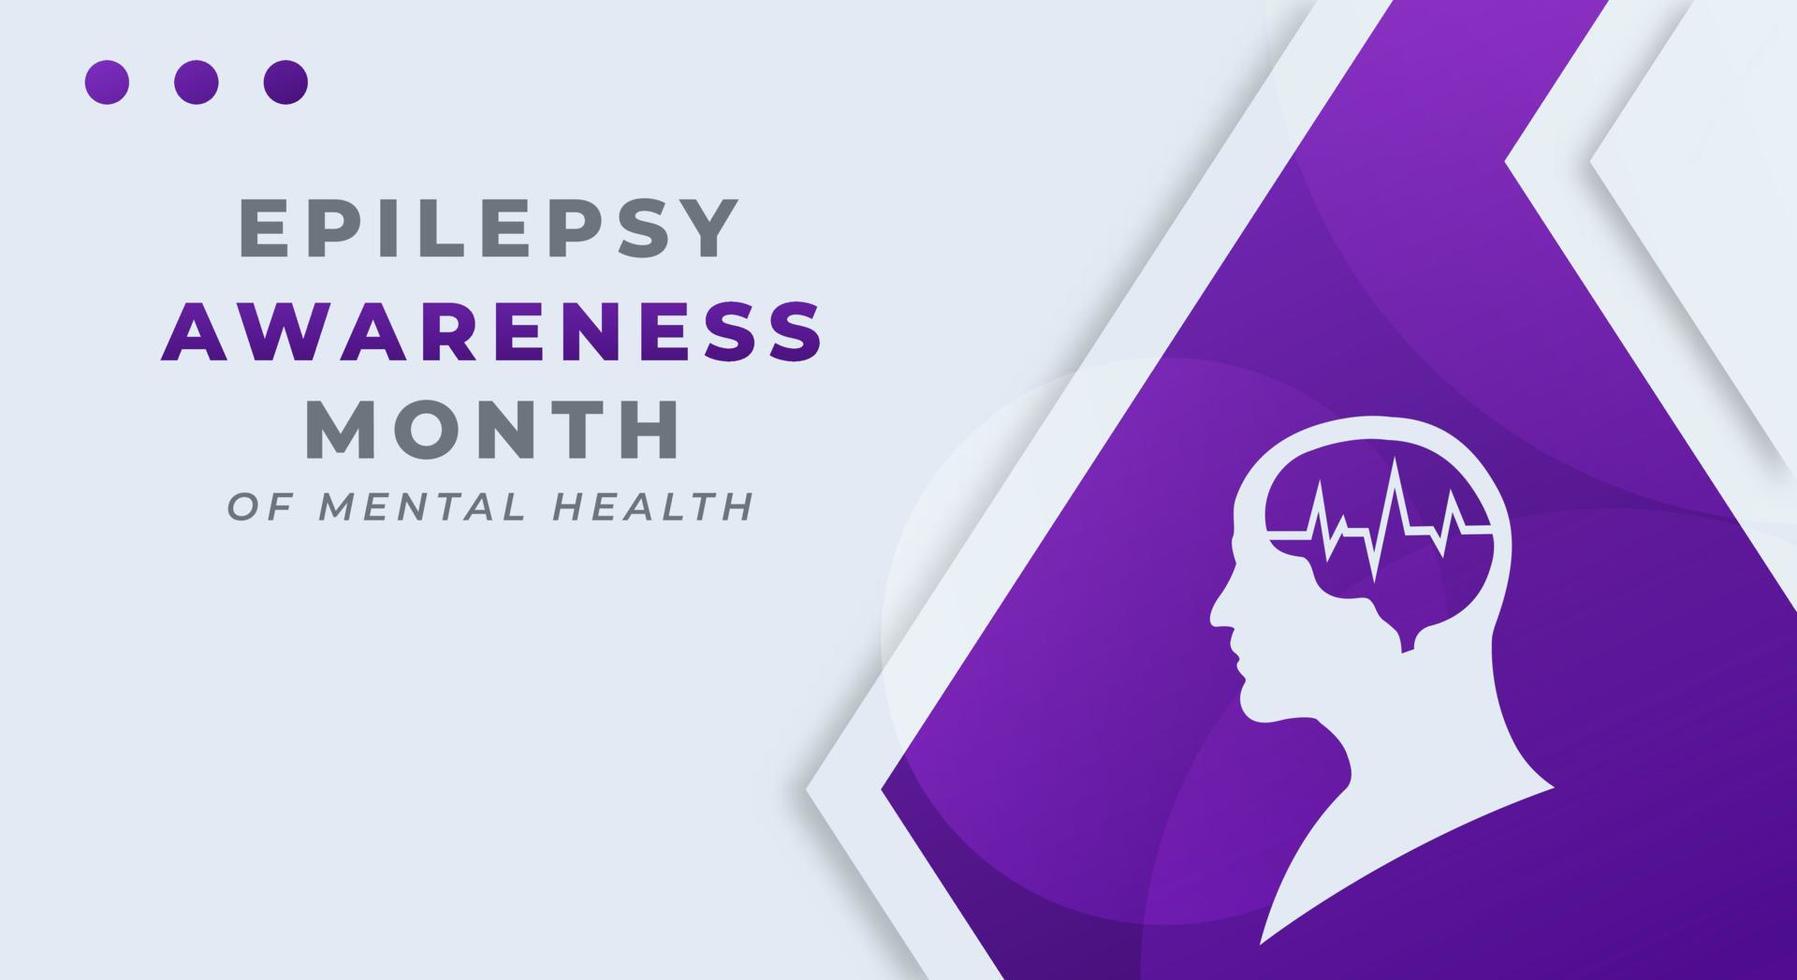 Epilepsy Awareness Month Celebration Vector Design Illustration for Background, Poster, Banner, Advertising, Greeting Card